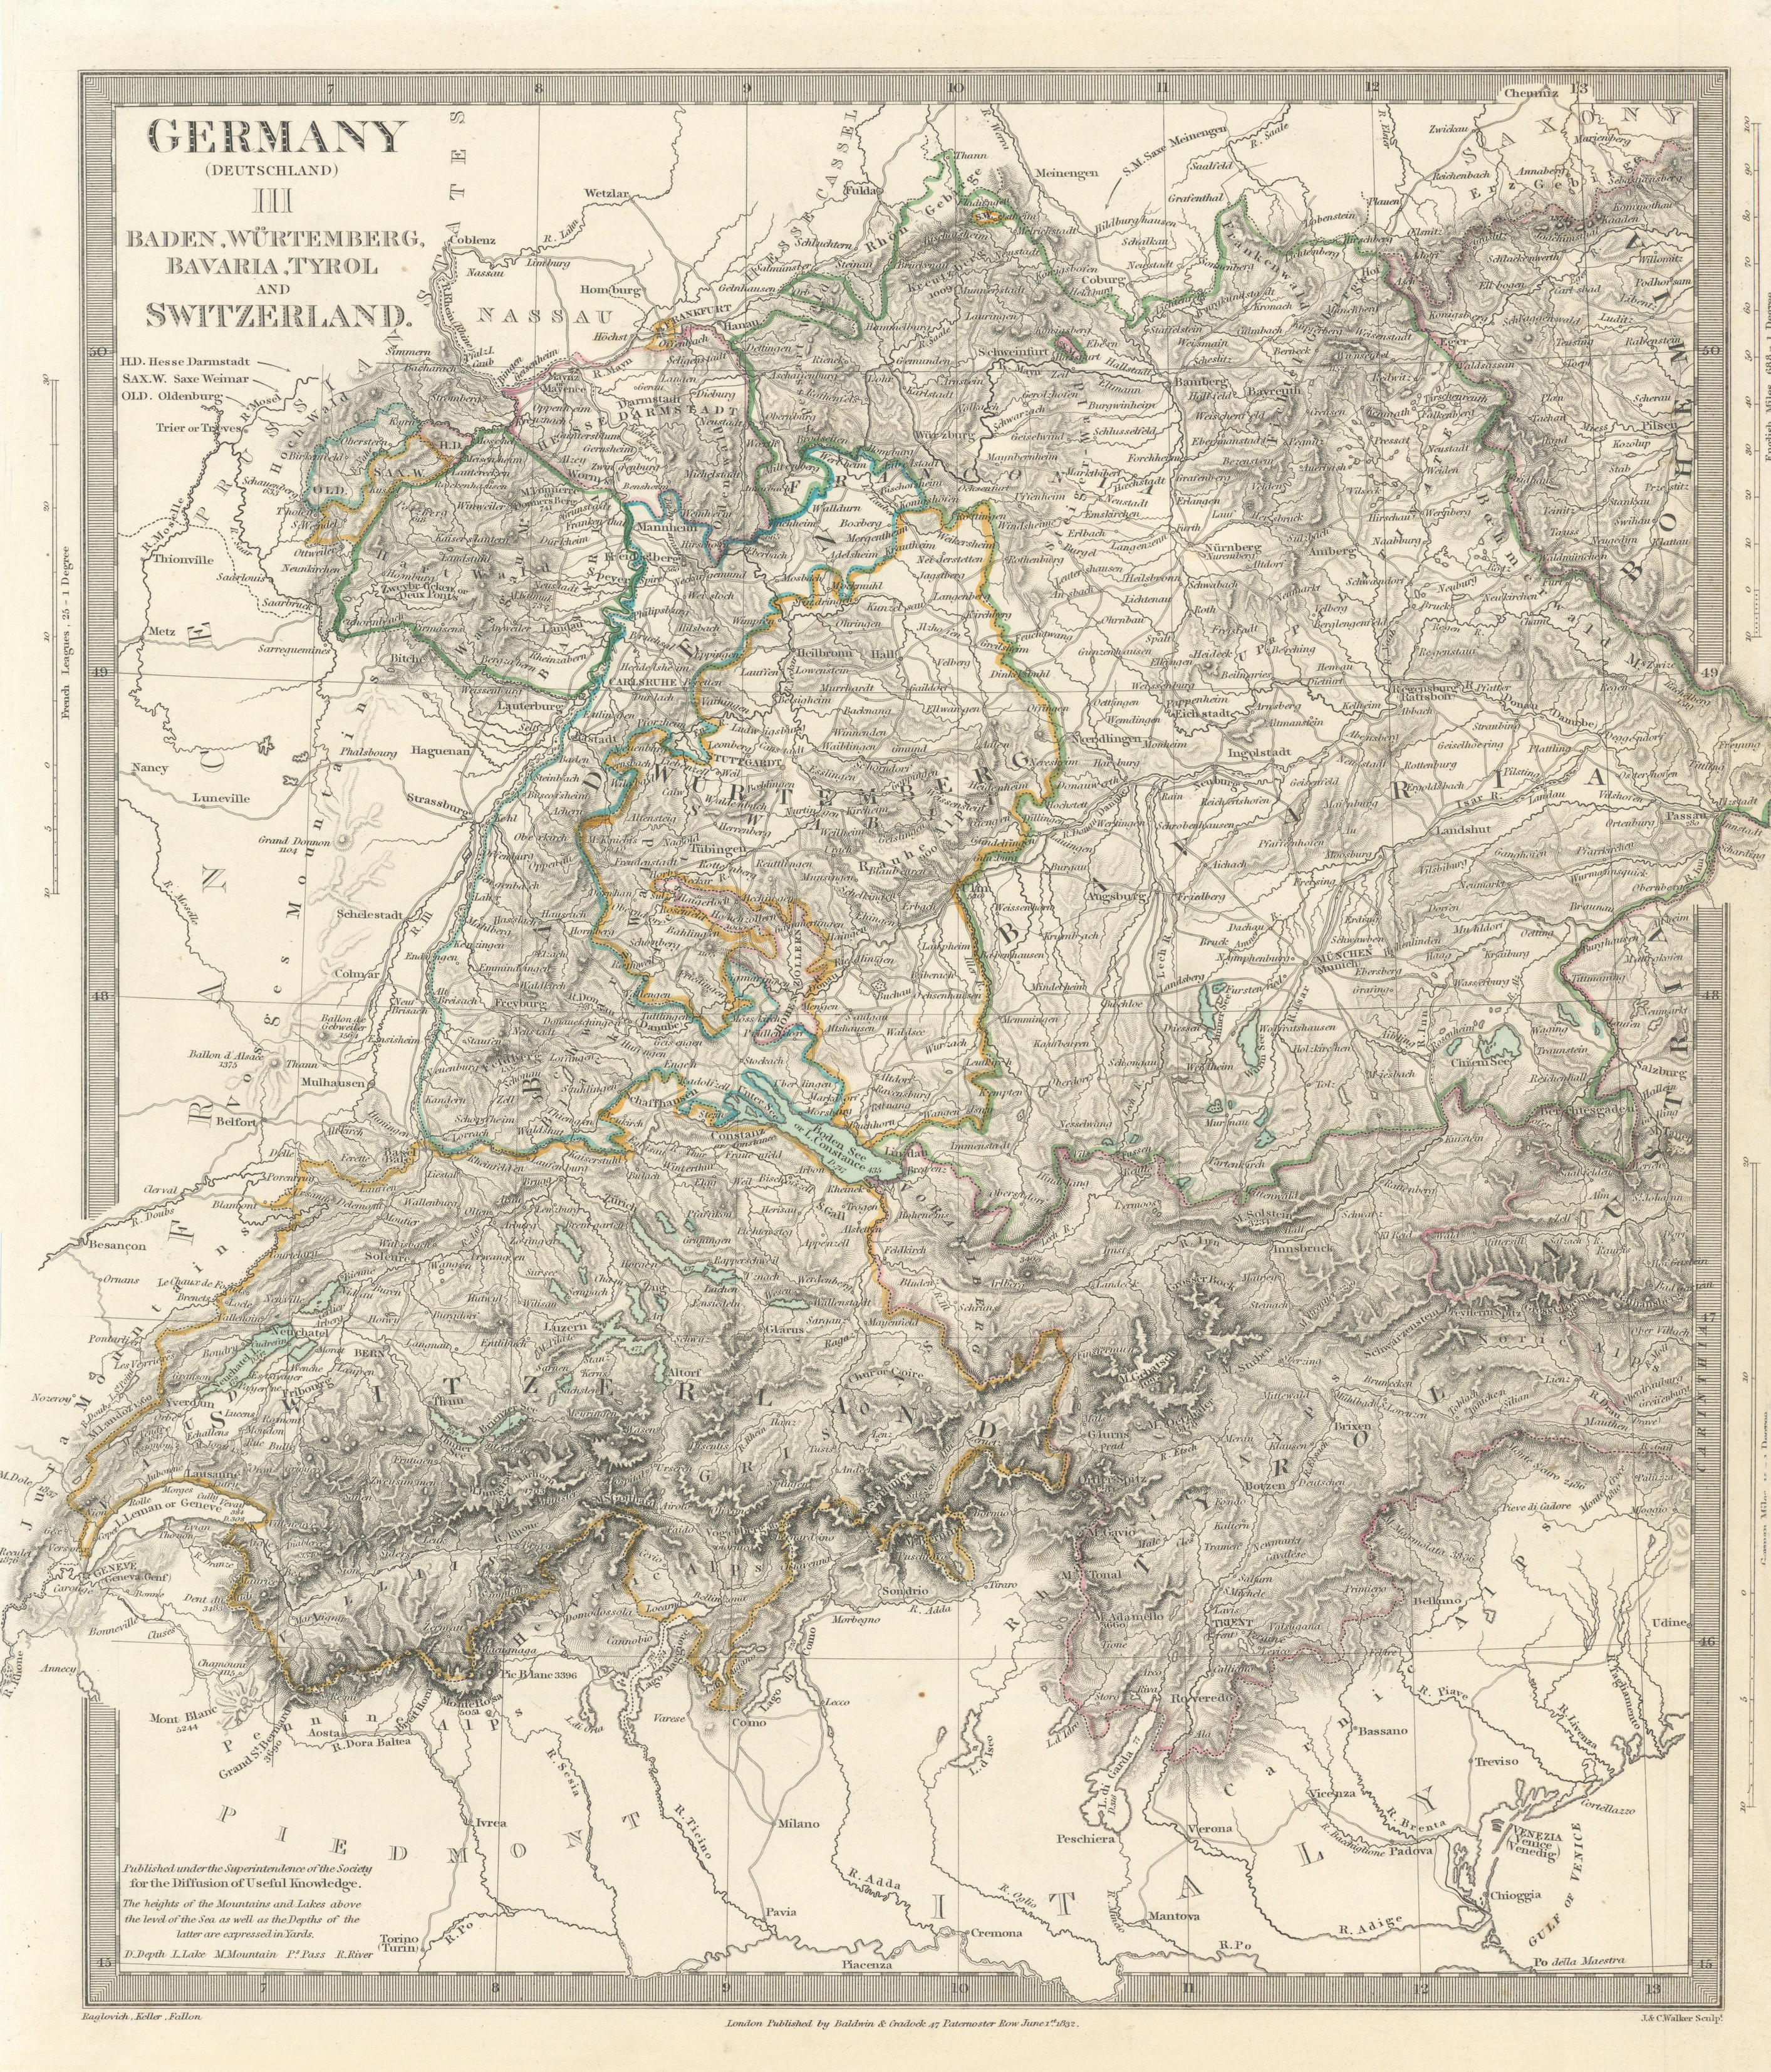 Associate Product GERMANY SWITZERLAND AUSTRIA. Baden, Württemberg, Bavaria, Tyrol. SDUK 1844 map